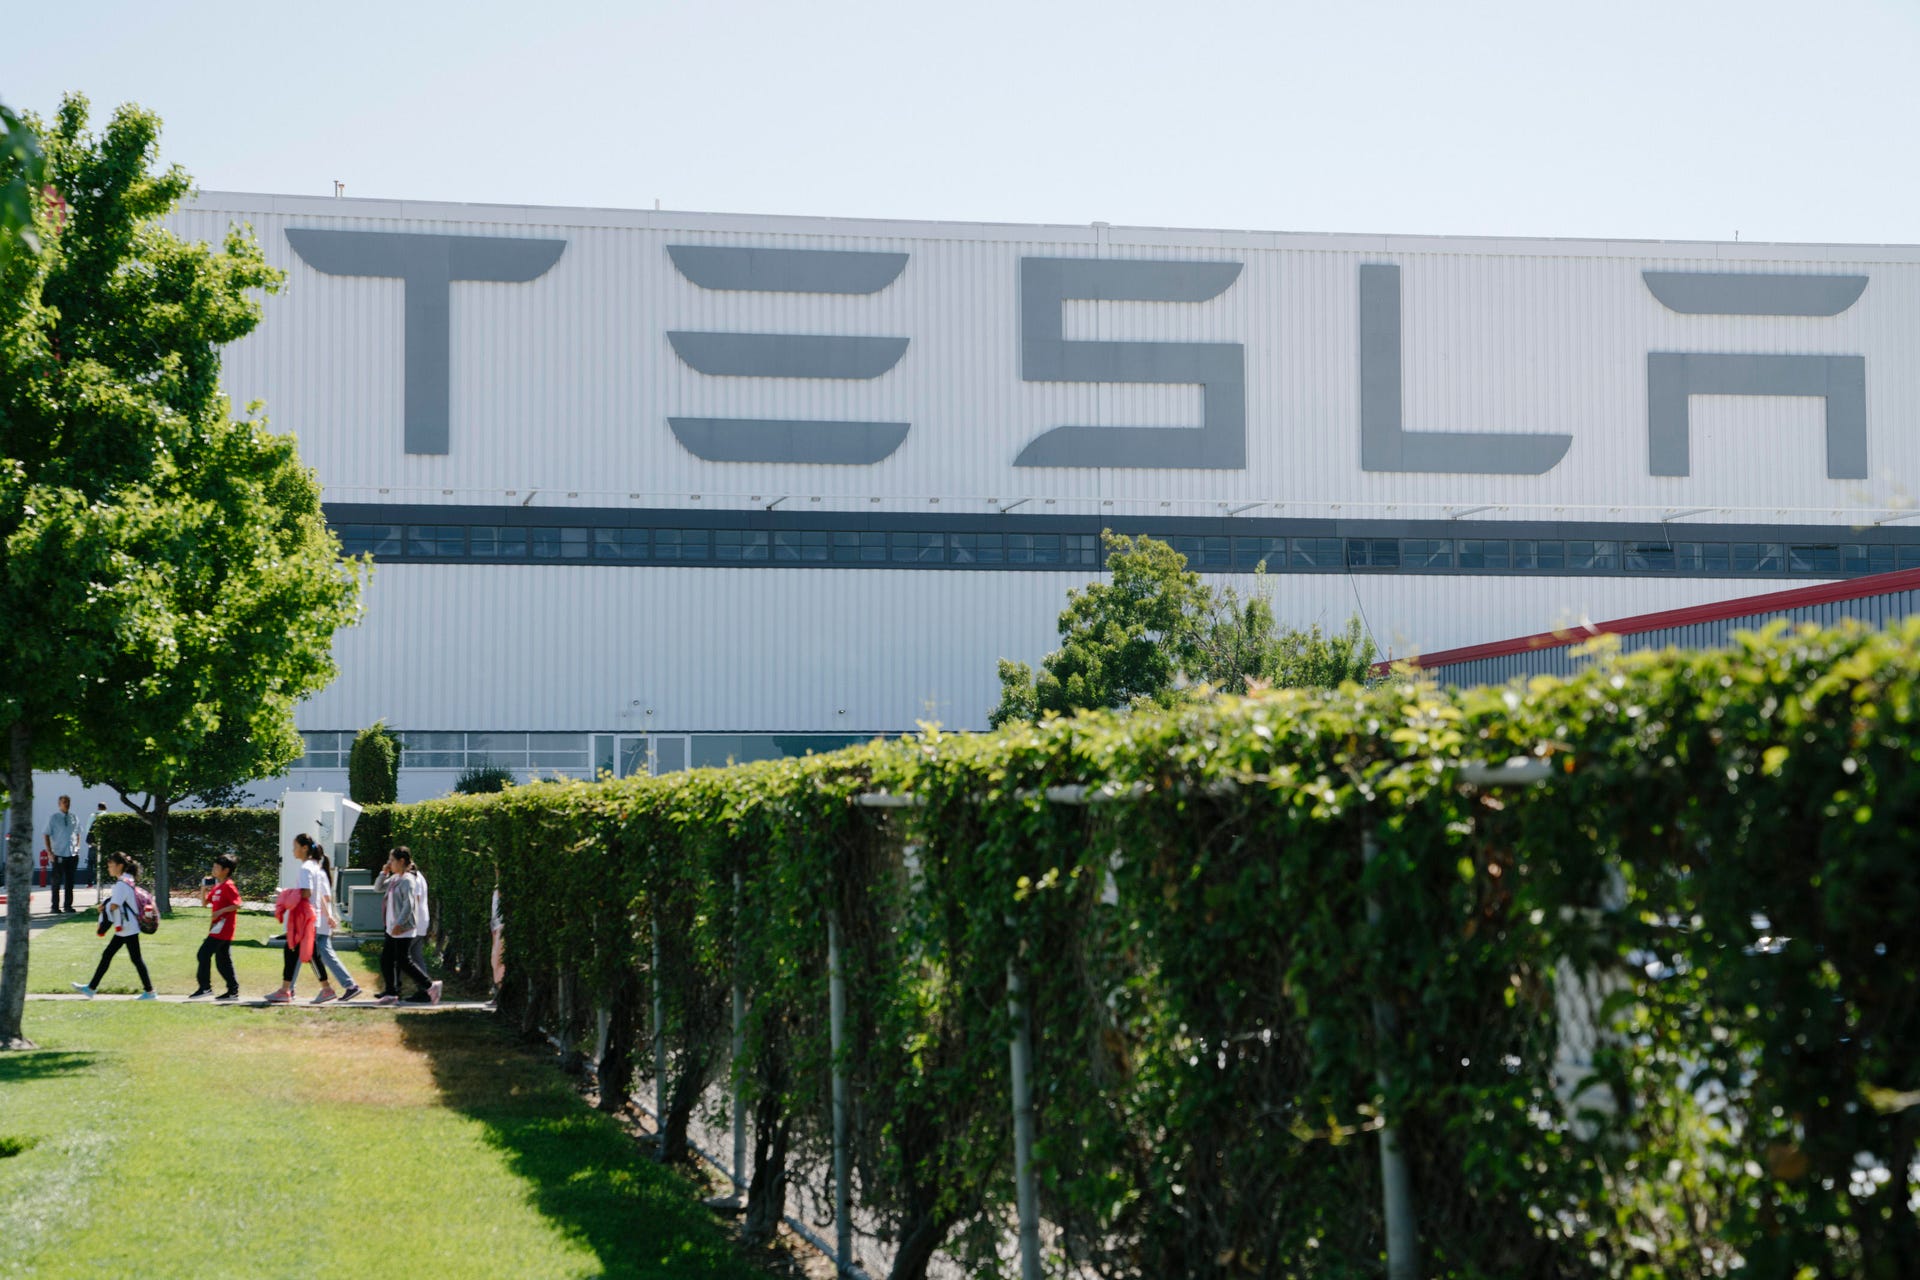 Tour of Tesla Factor in Fremont, California